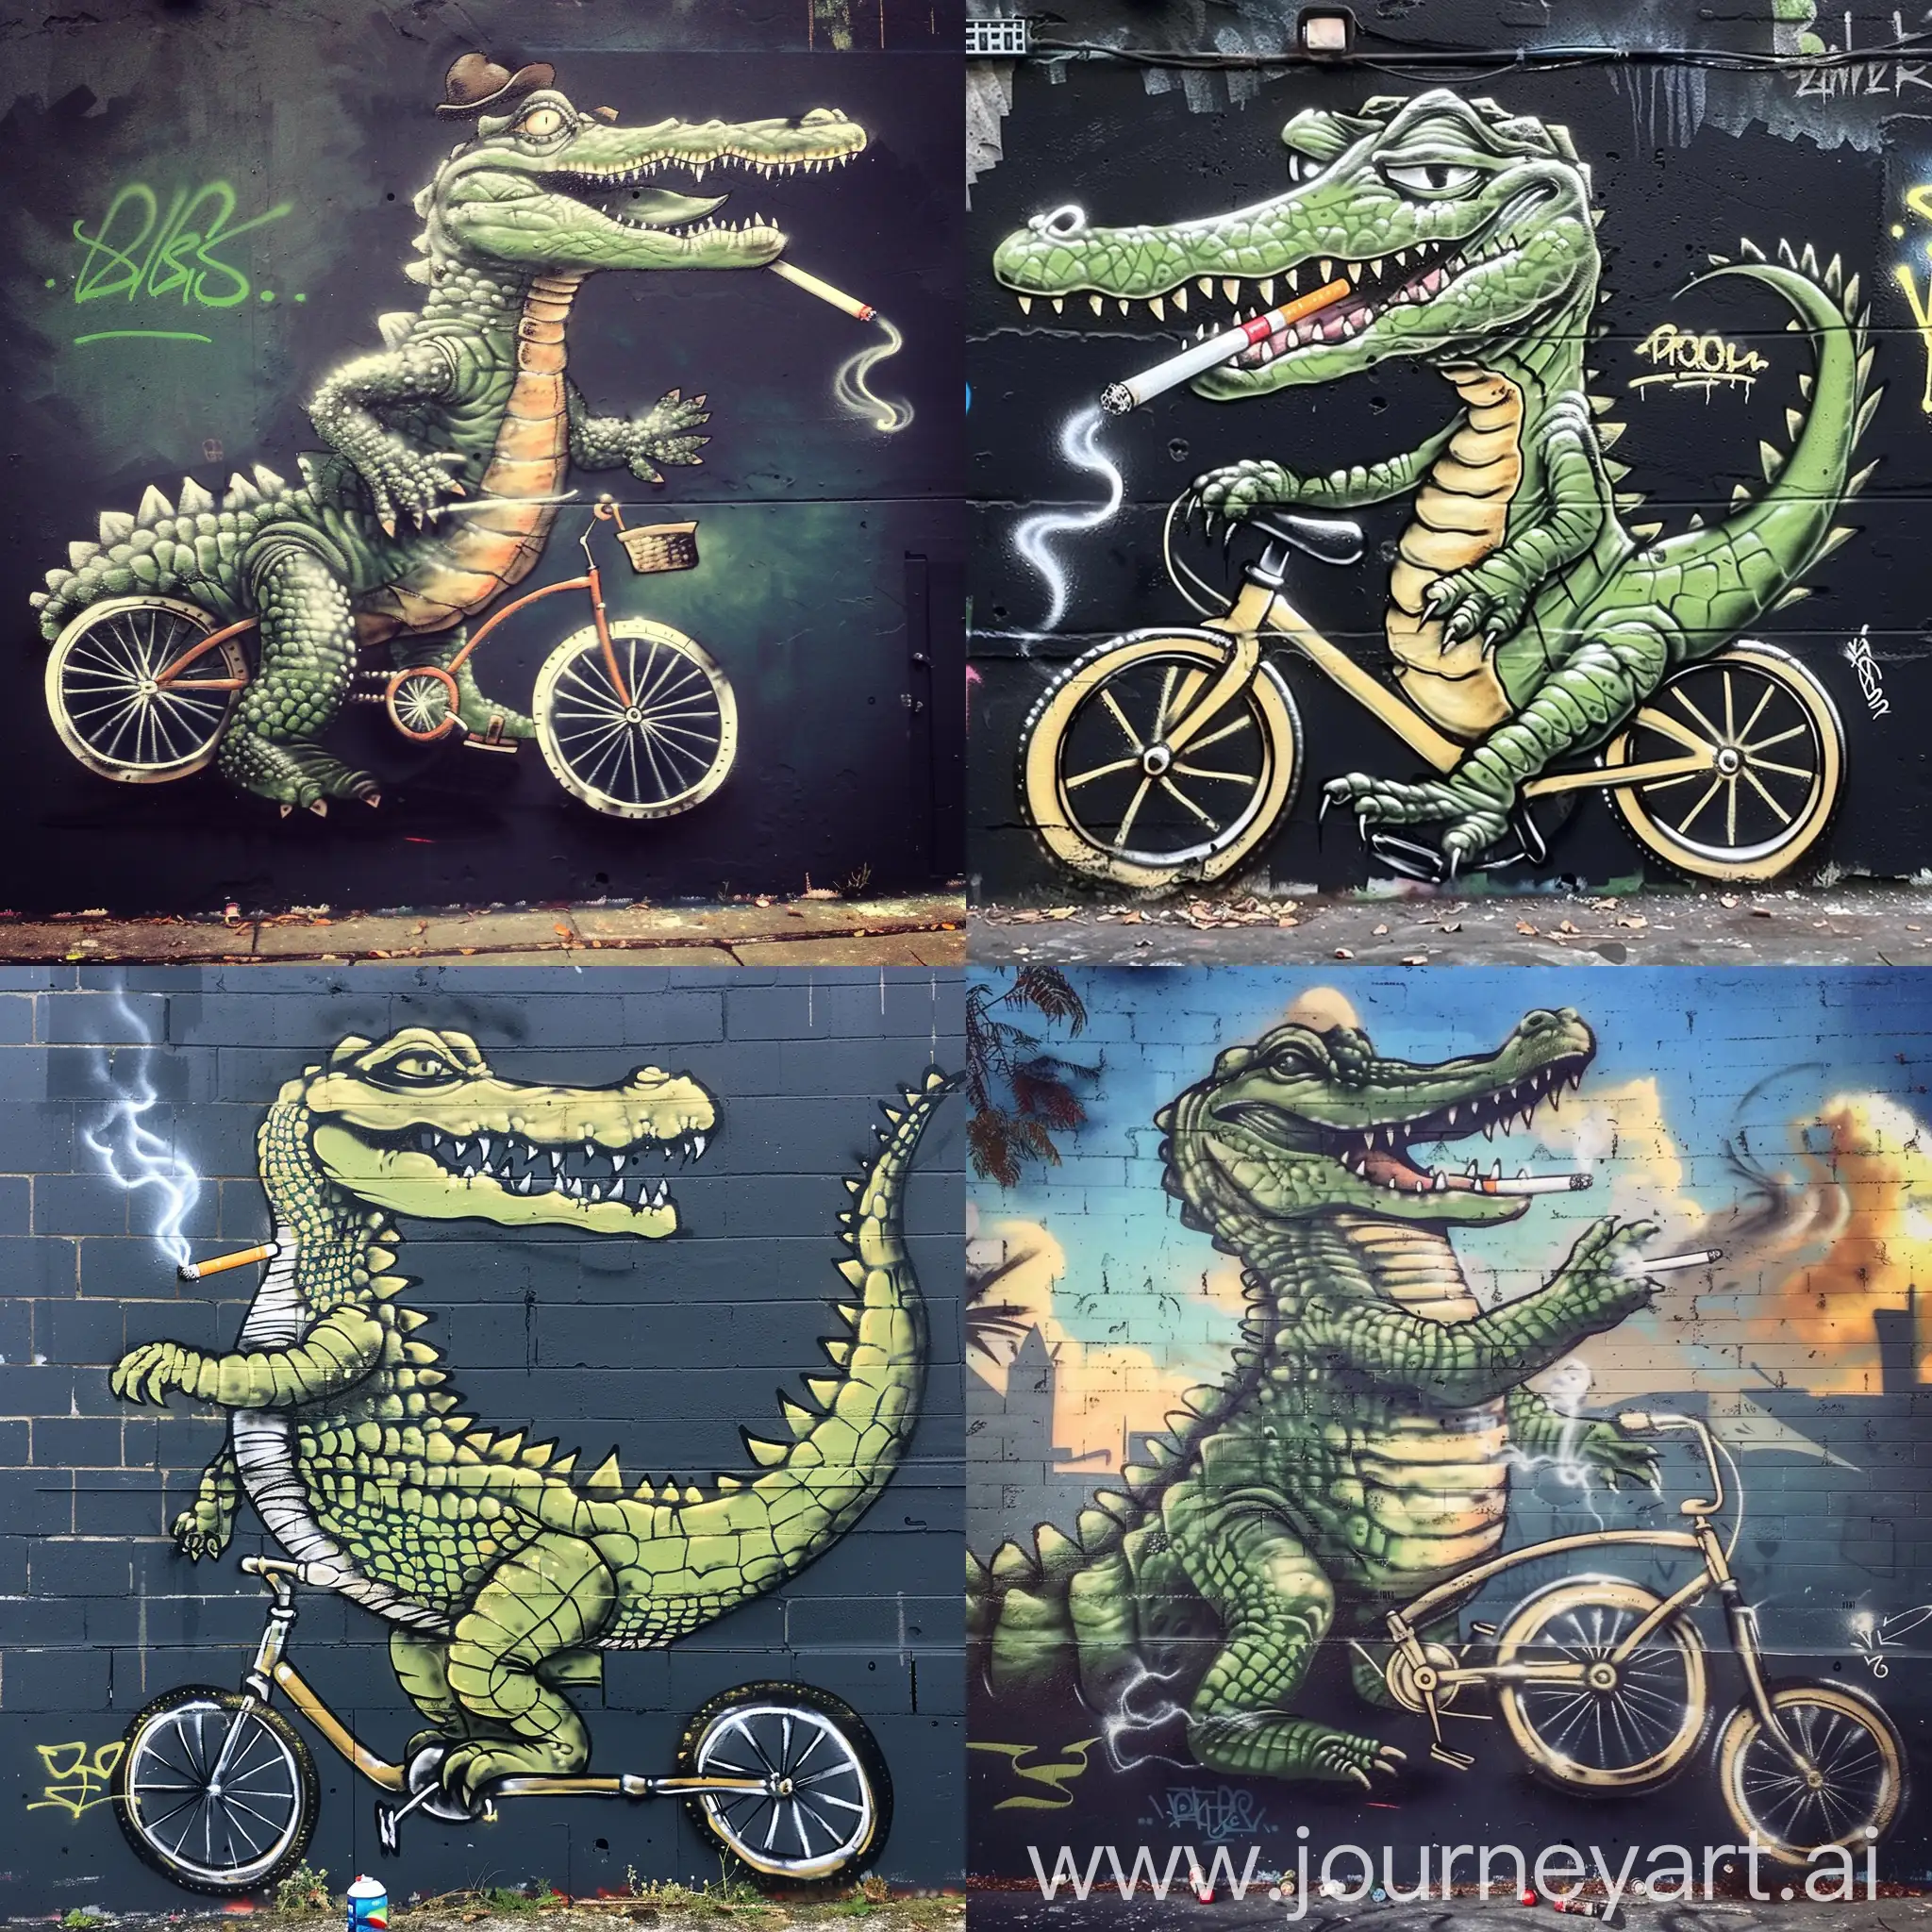 Urban-Street-Art-Graffiti-of-a-CigaretteSmoking-Crocodile-Riding-a-Bicycle